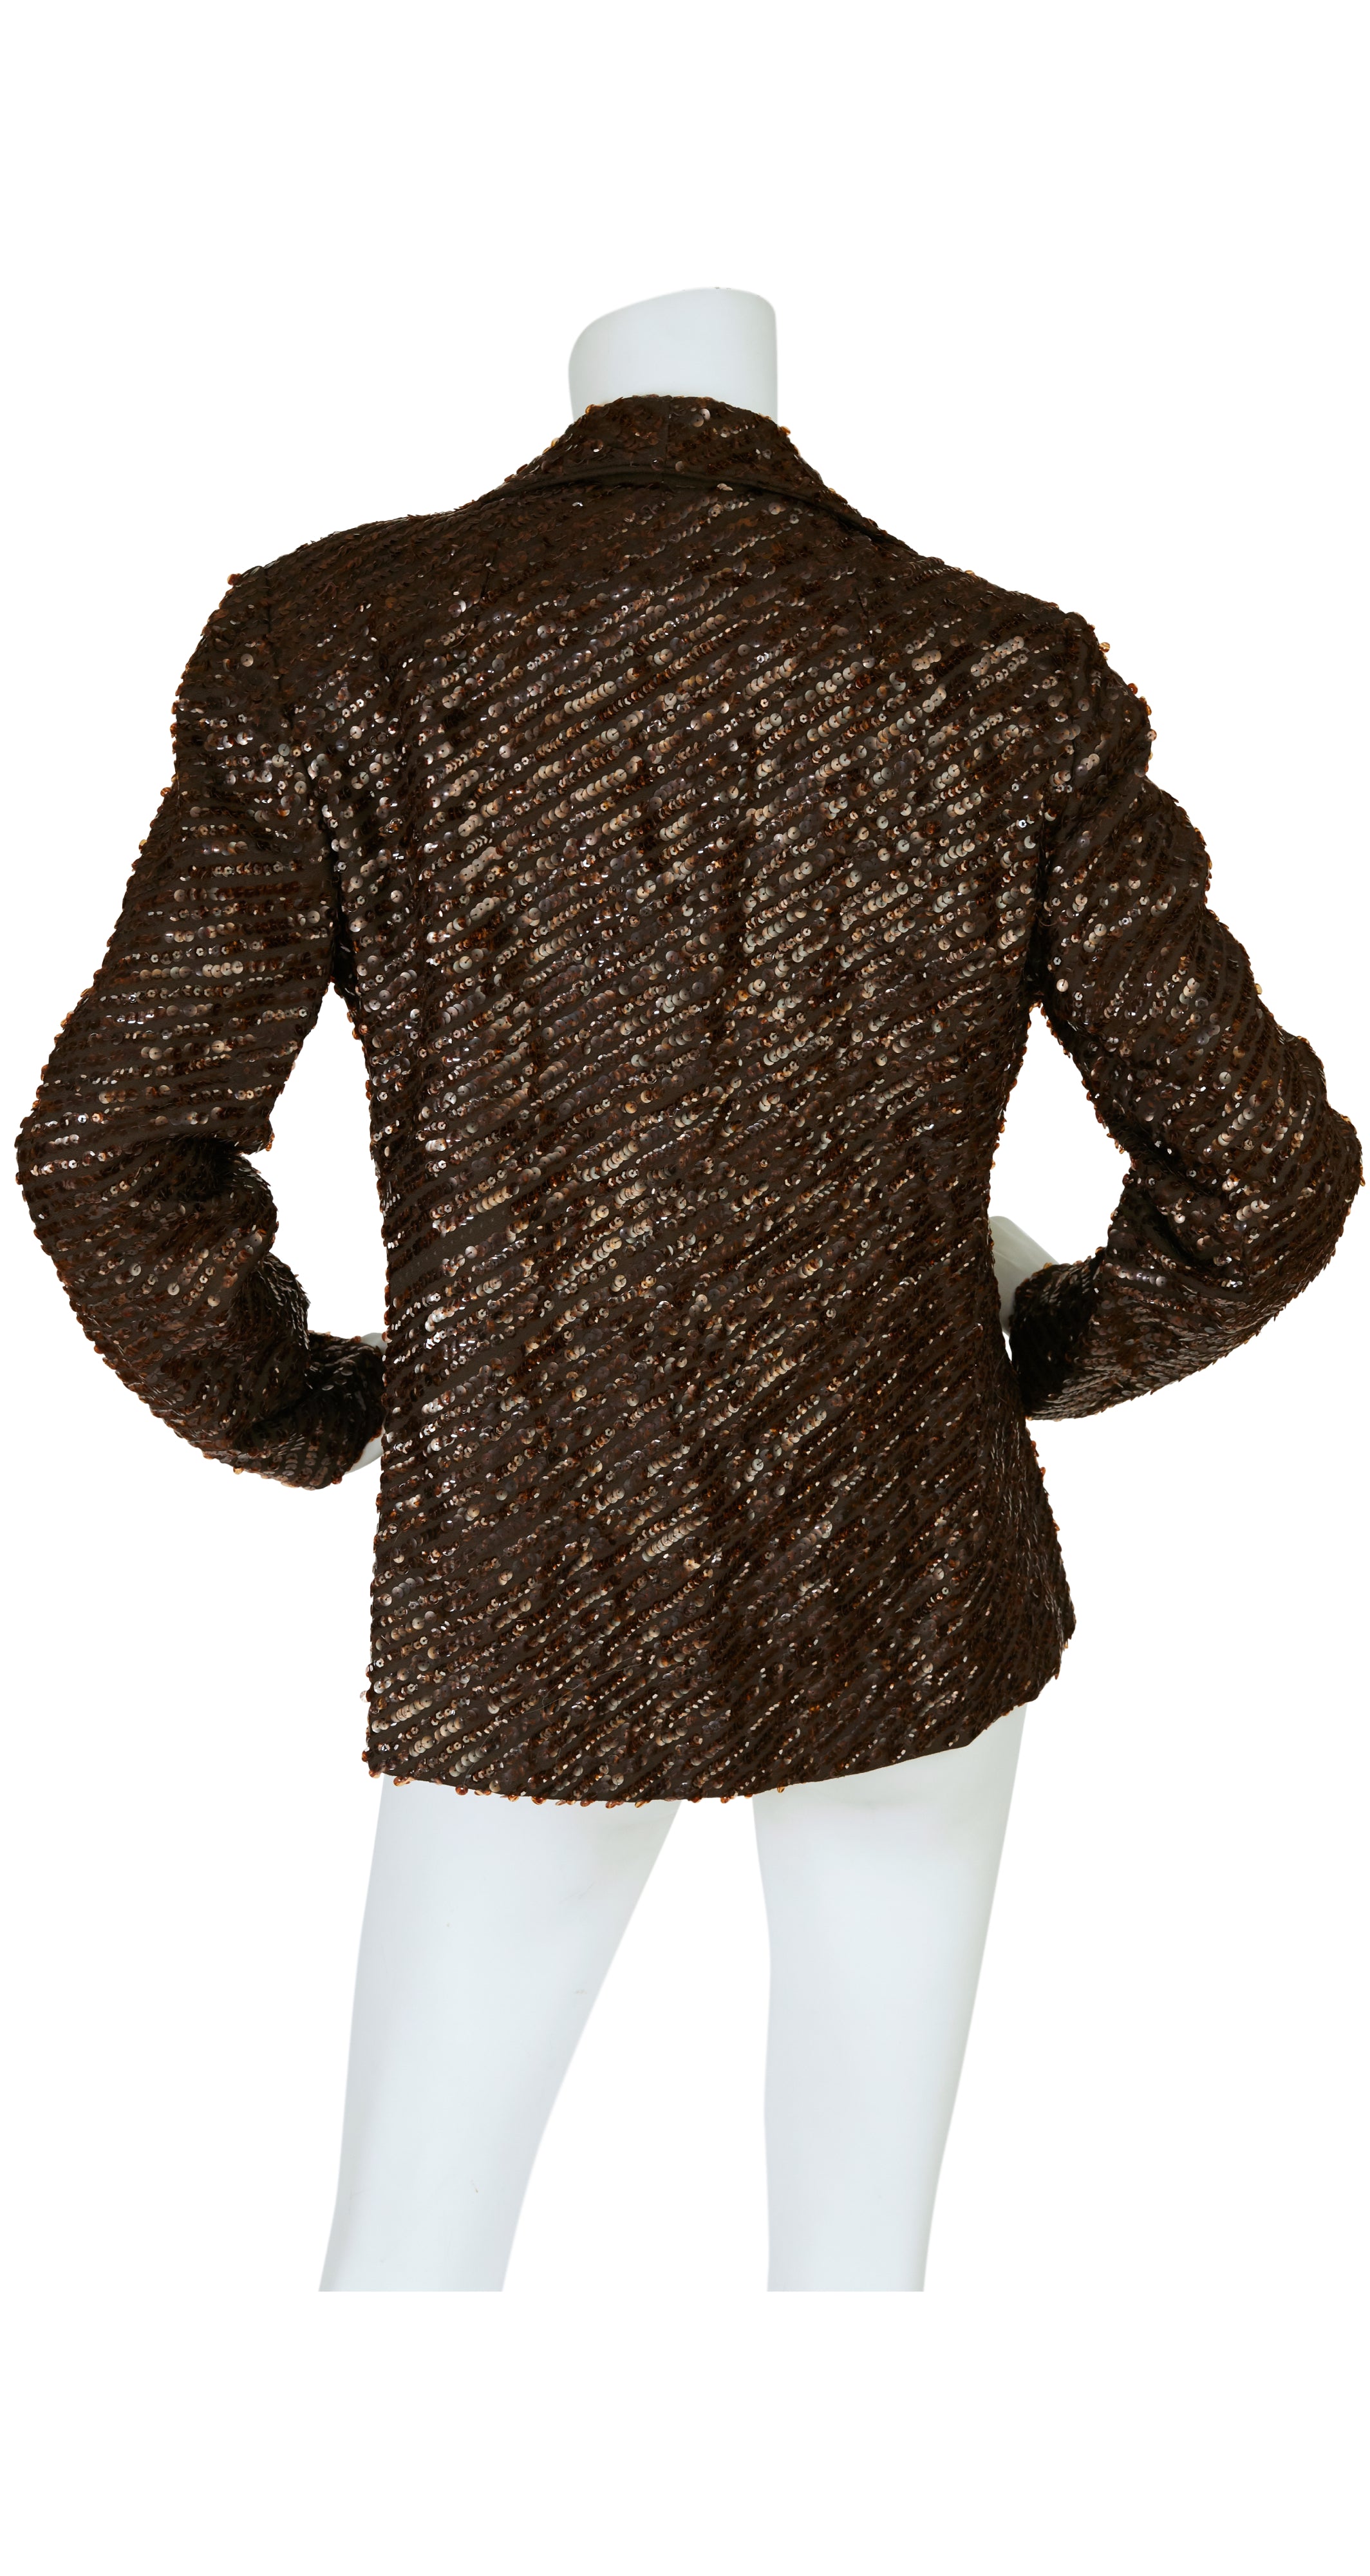 1970s Elinor Simmons Glam Brown Sequin & Crepe Jacket